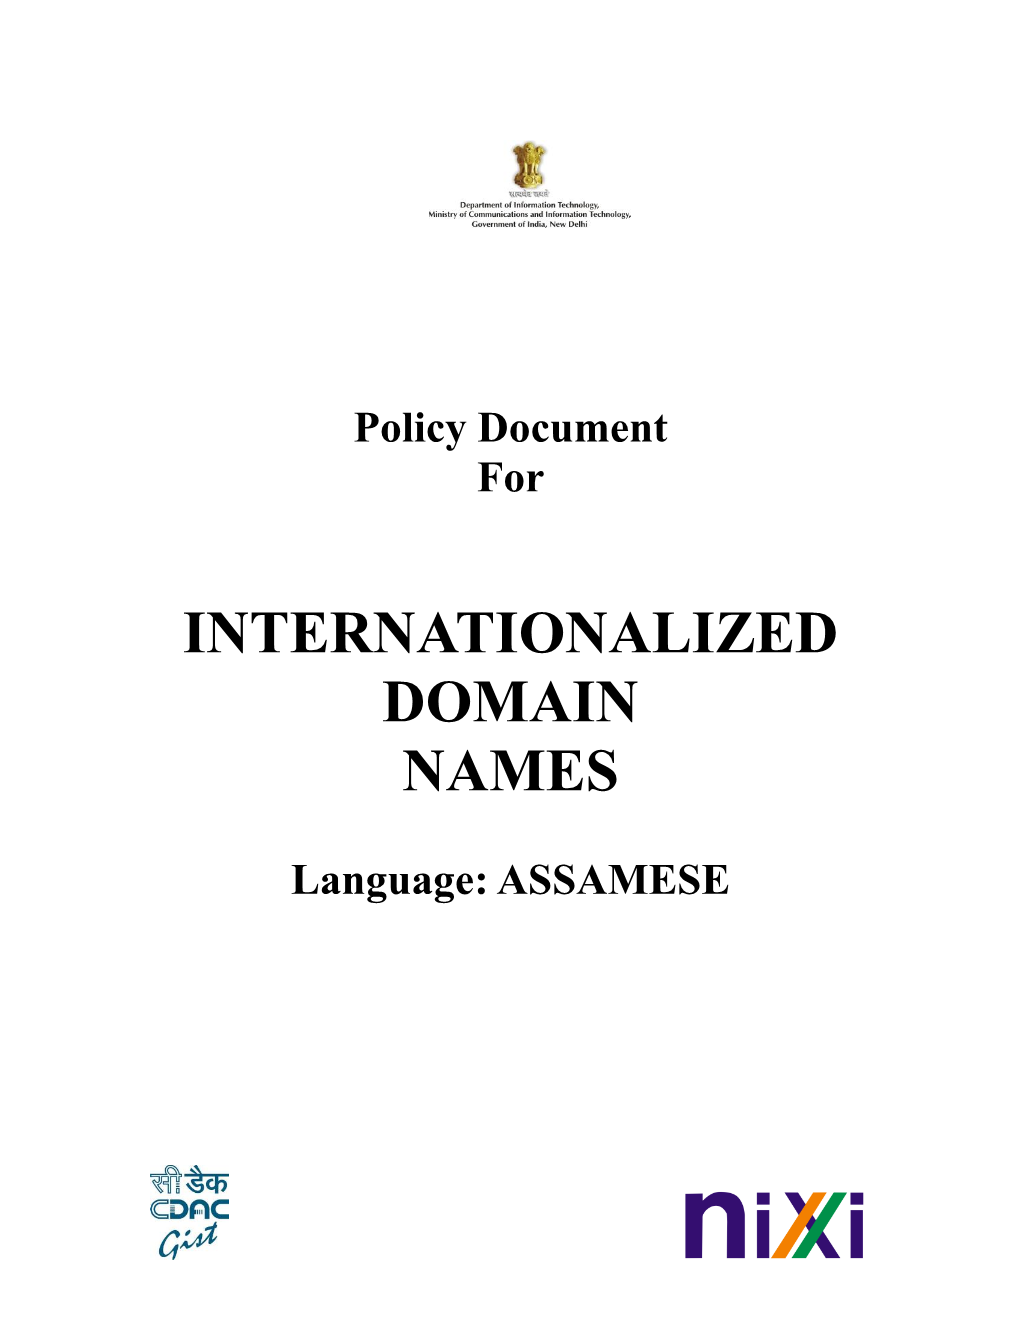 Internationalized Domain Names-Assamese